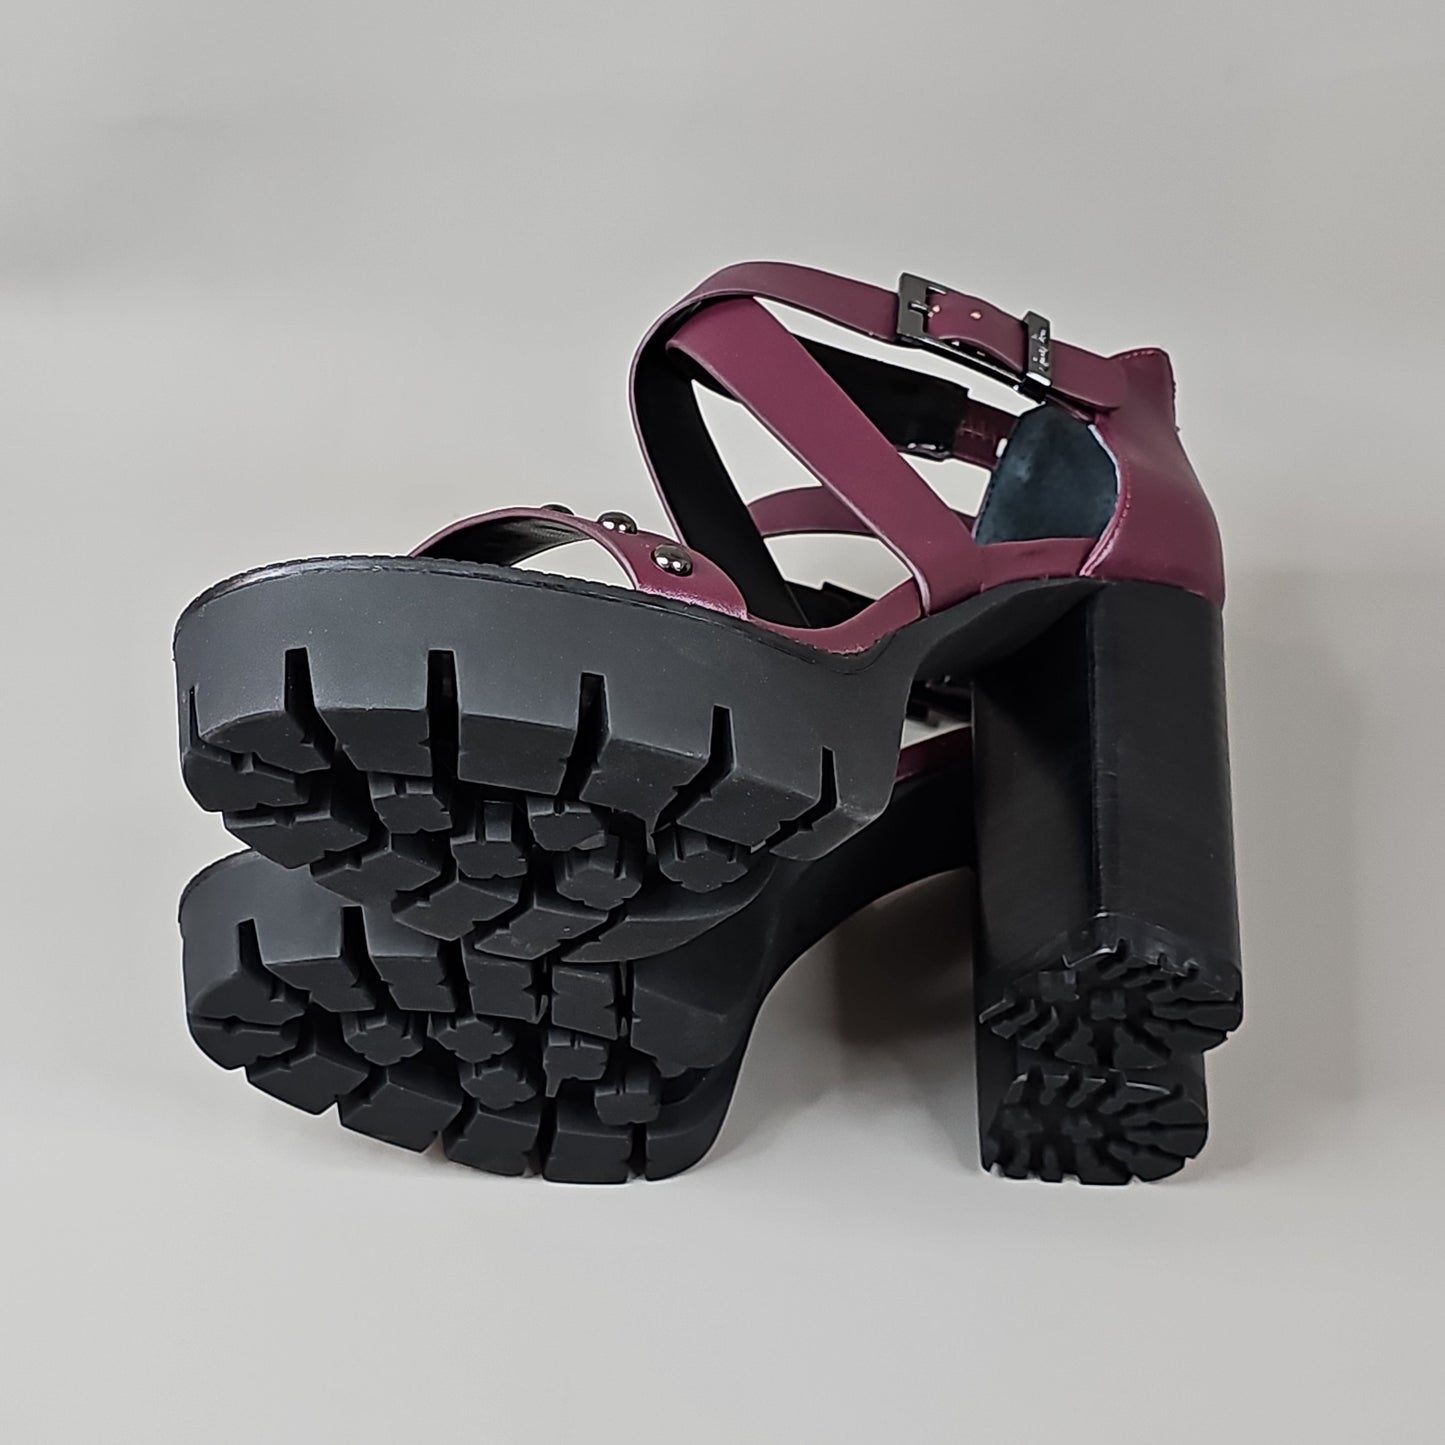 CHARLES BY CHARLES DAVID Women's Vanden Studded Sandal Shoe Sz 9M Burgundy (New)